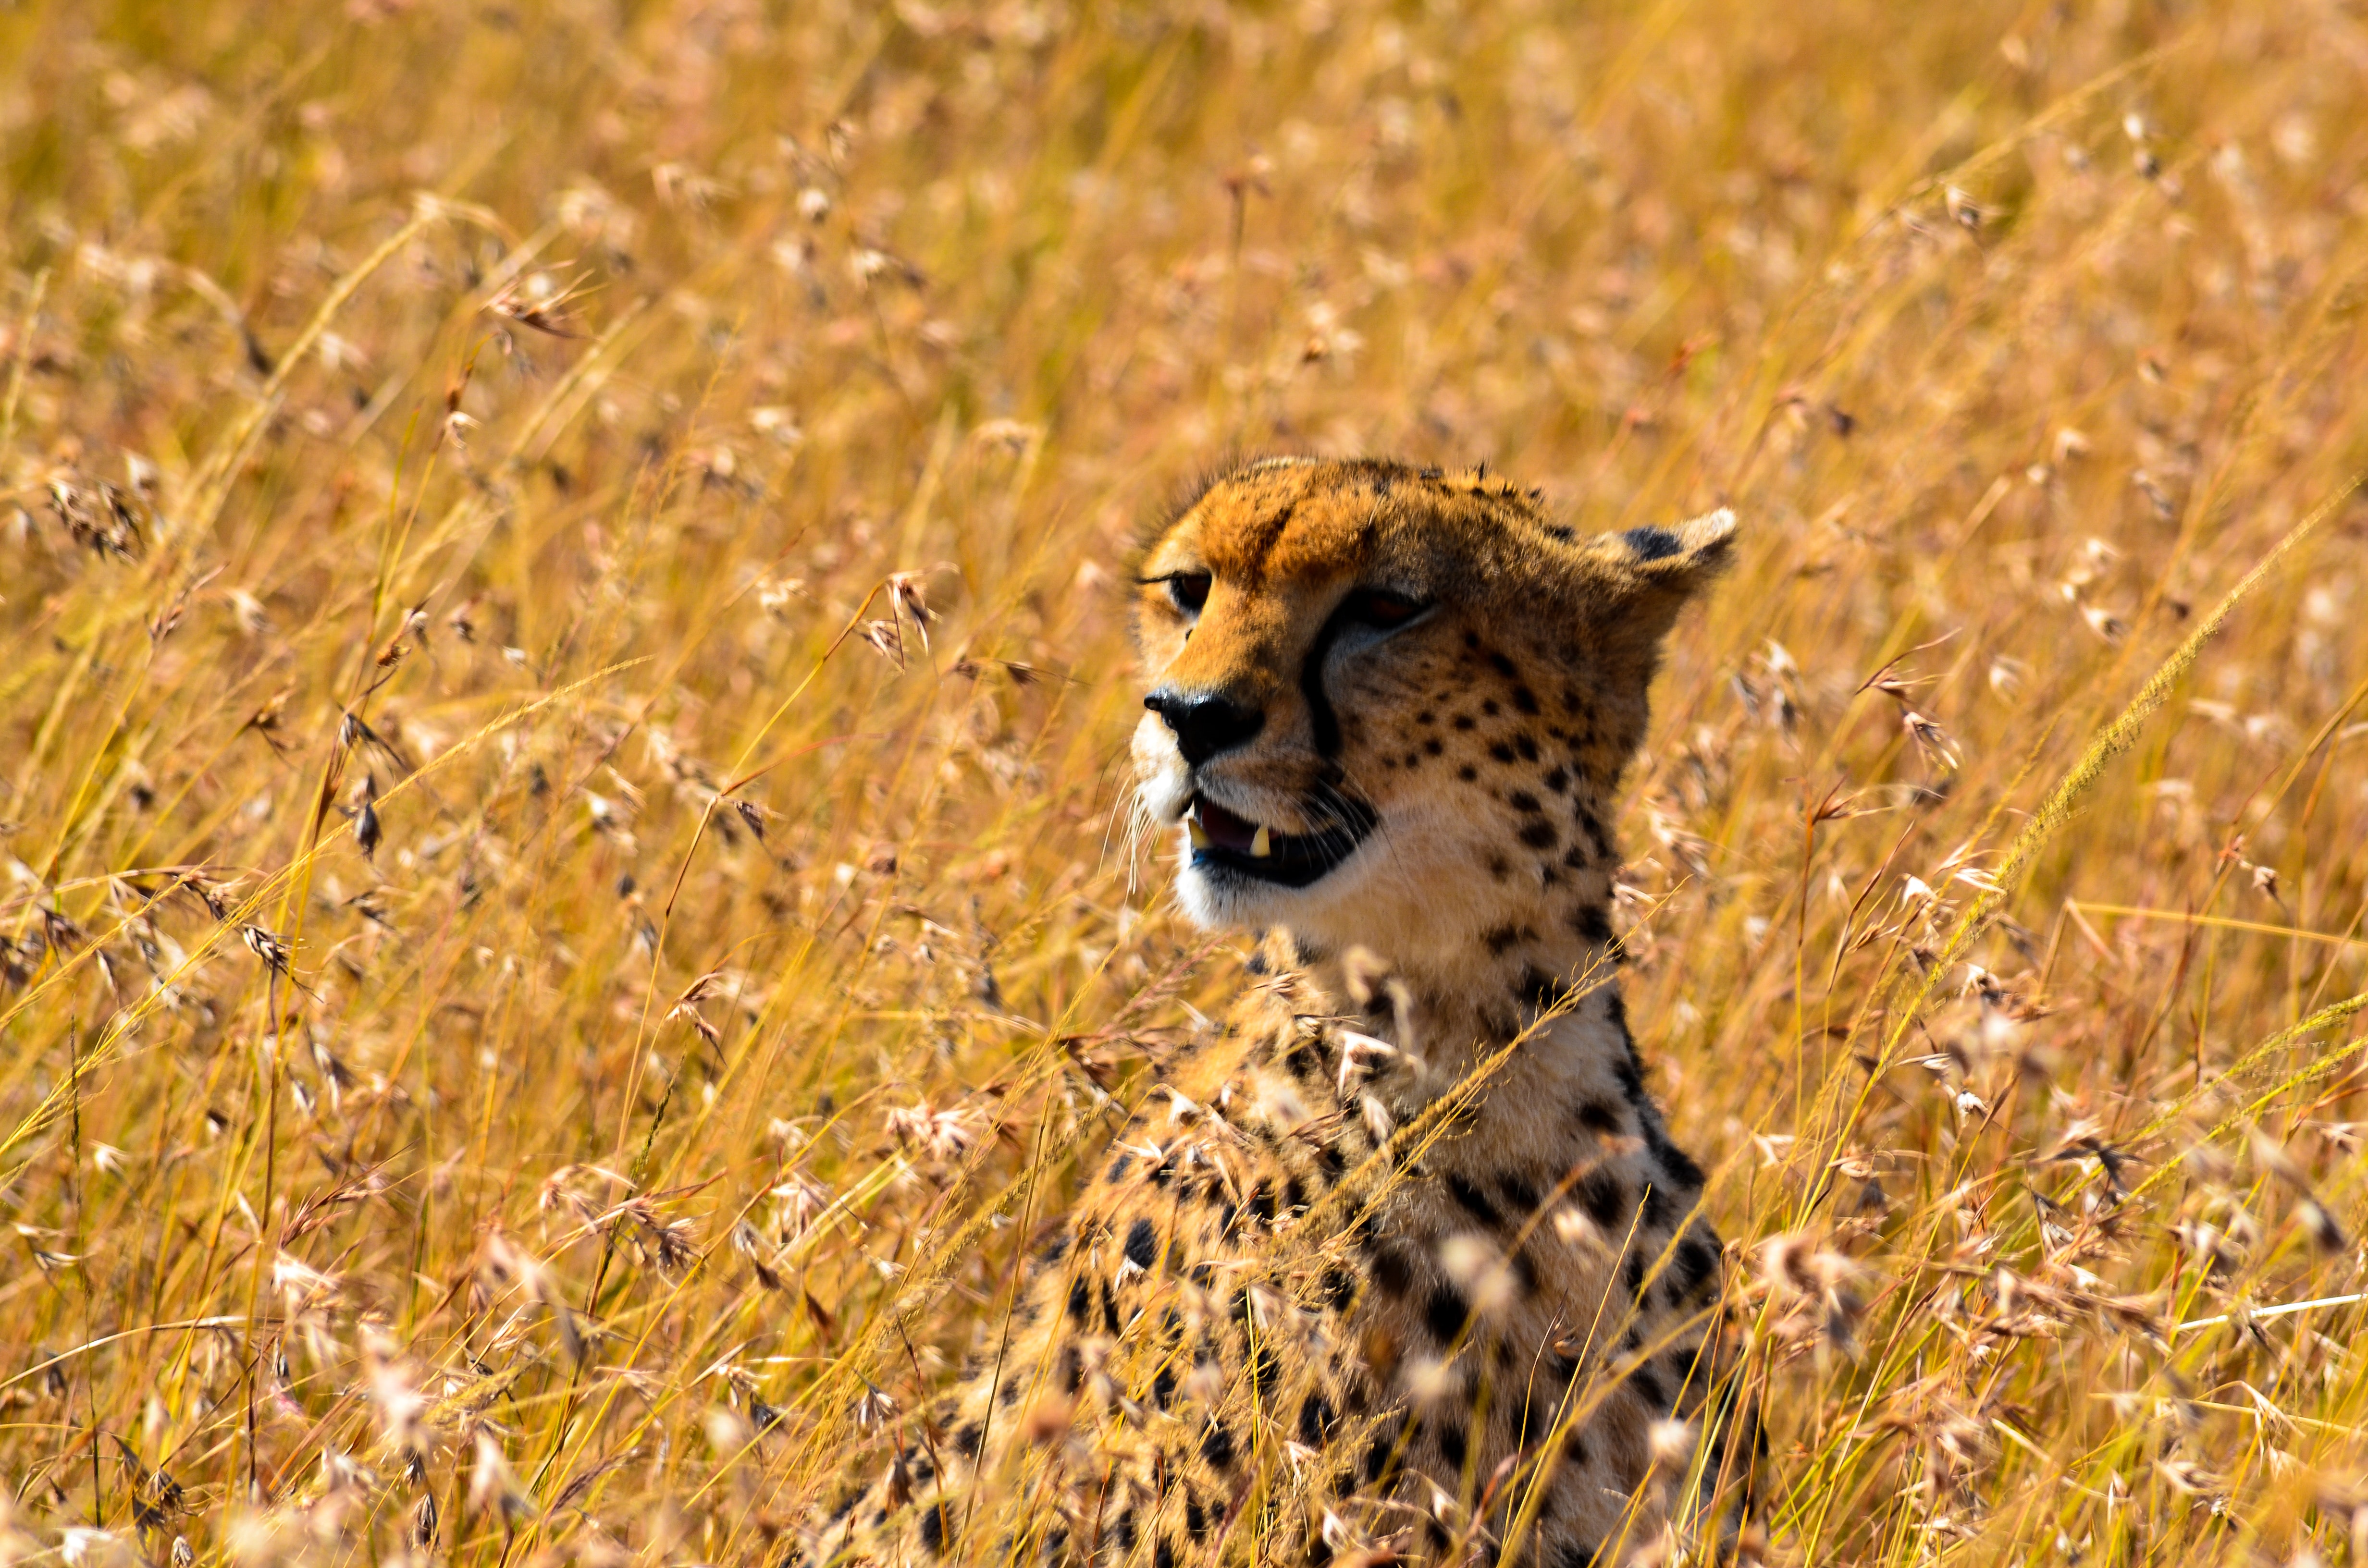 Cheetah on grass field photo